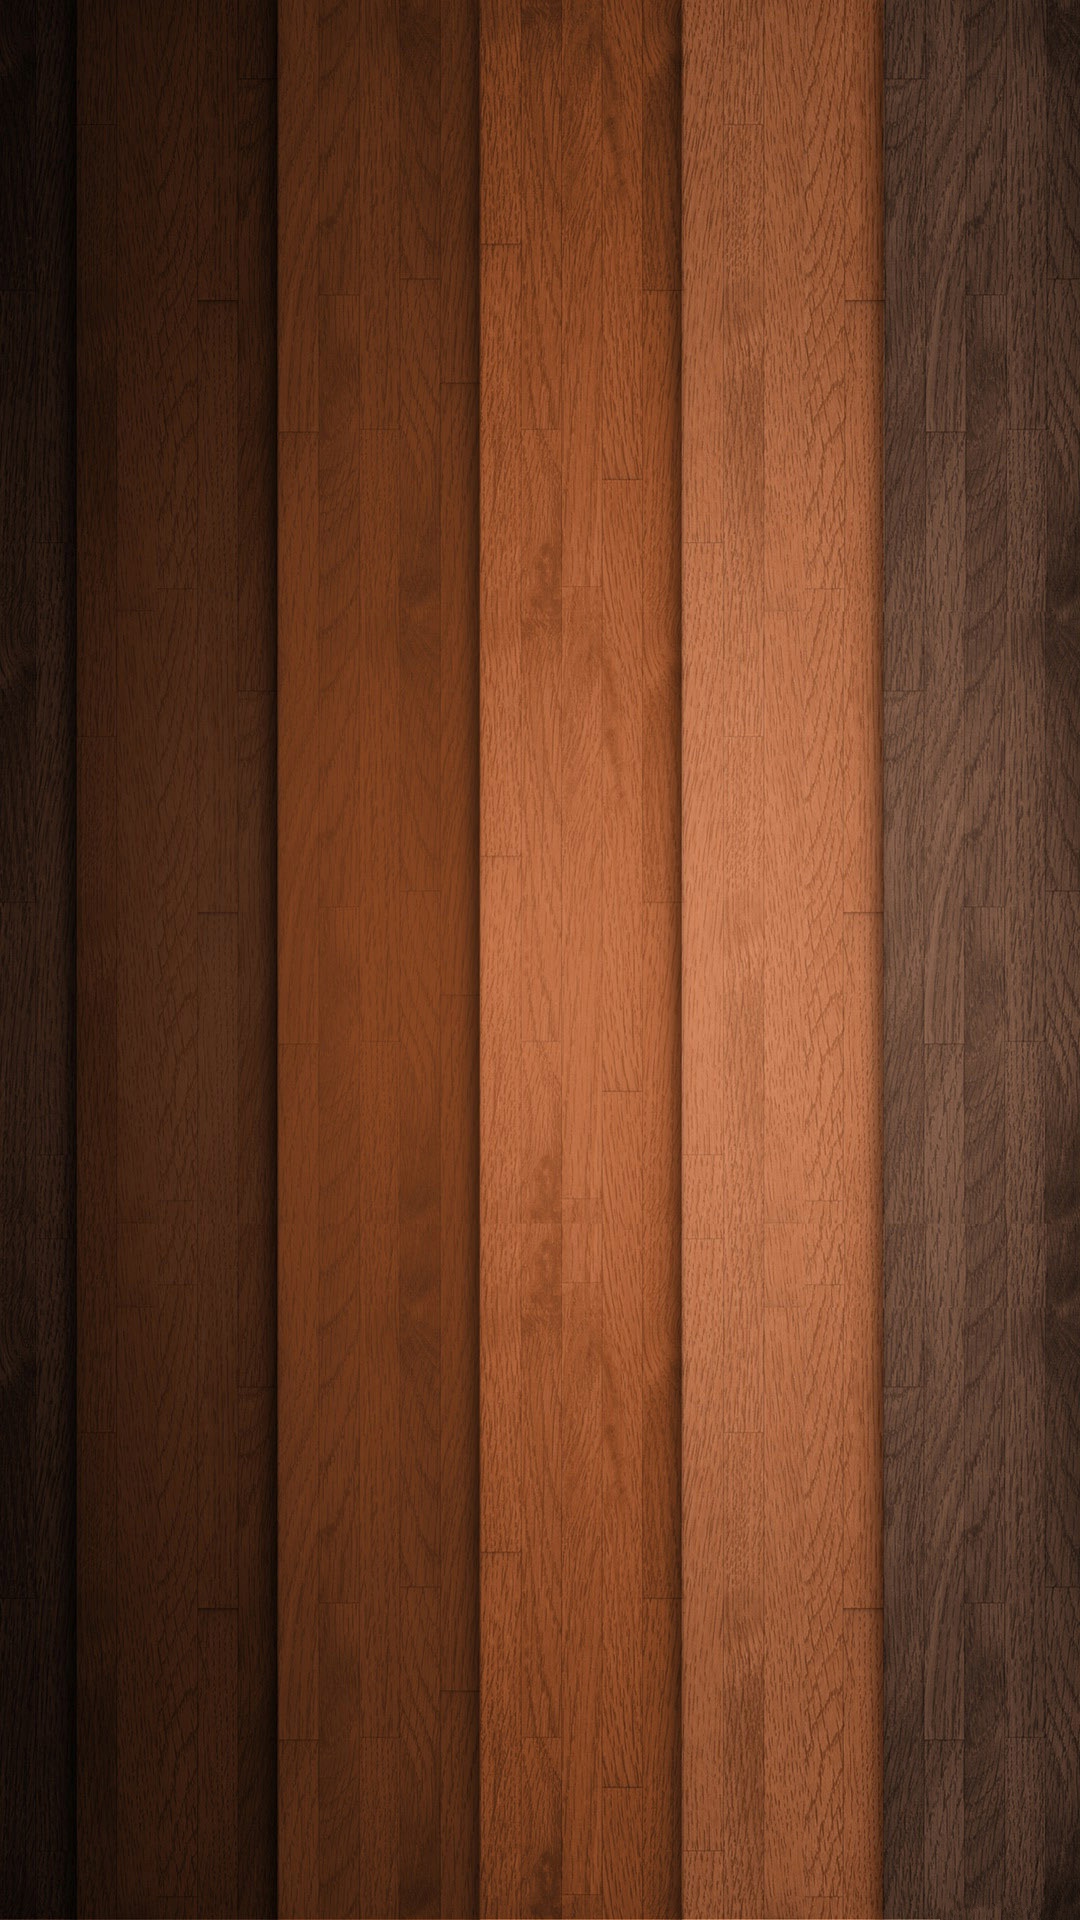 wood pattern wallpaper,wood,wood stain,hardwood,brown,plywood